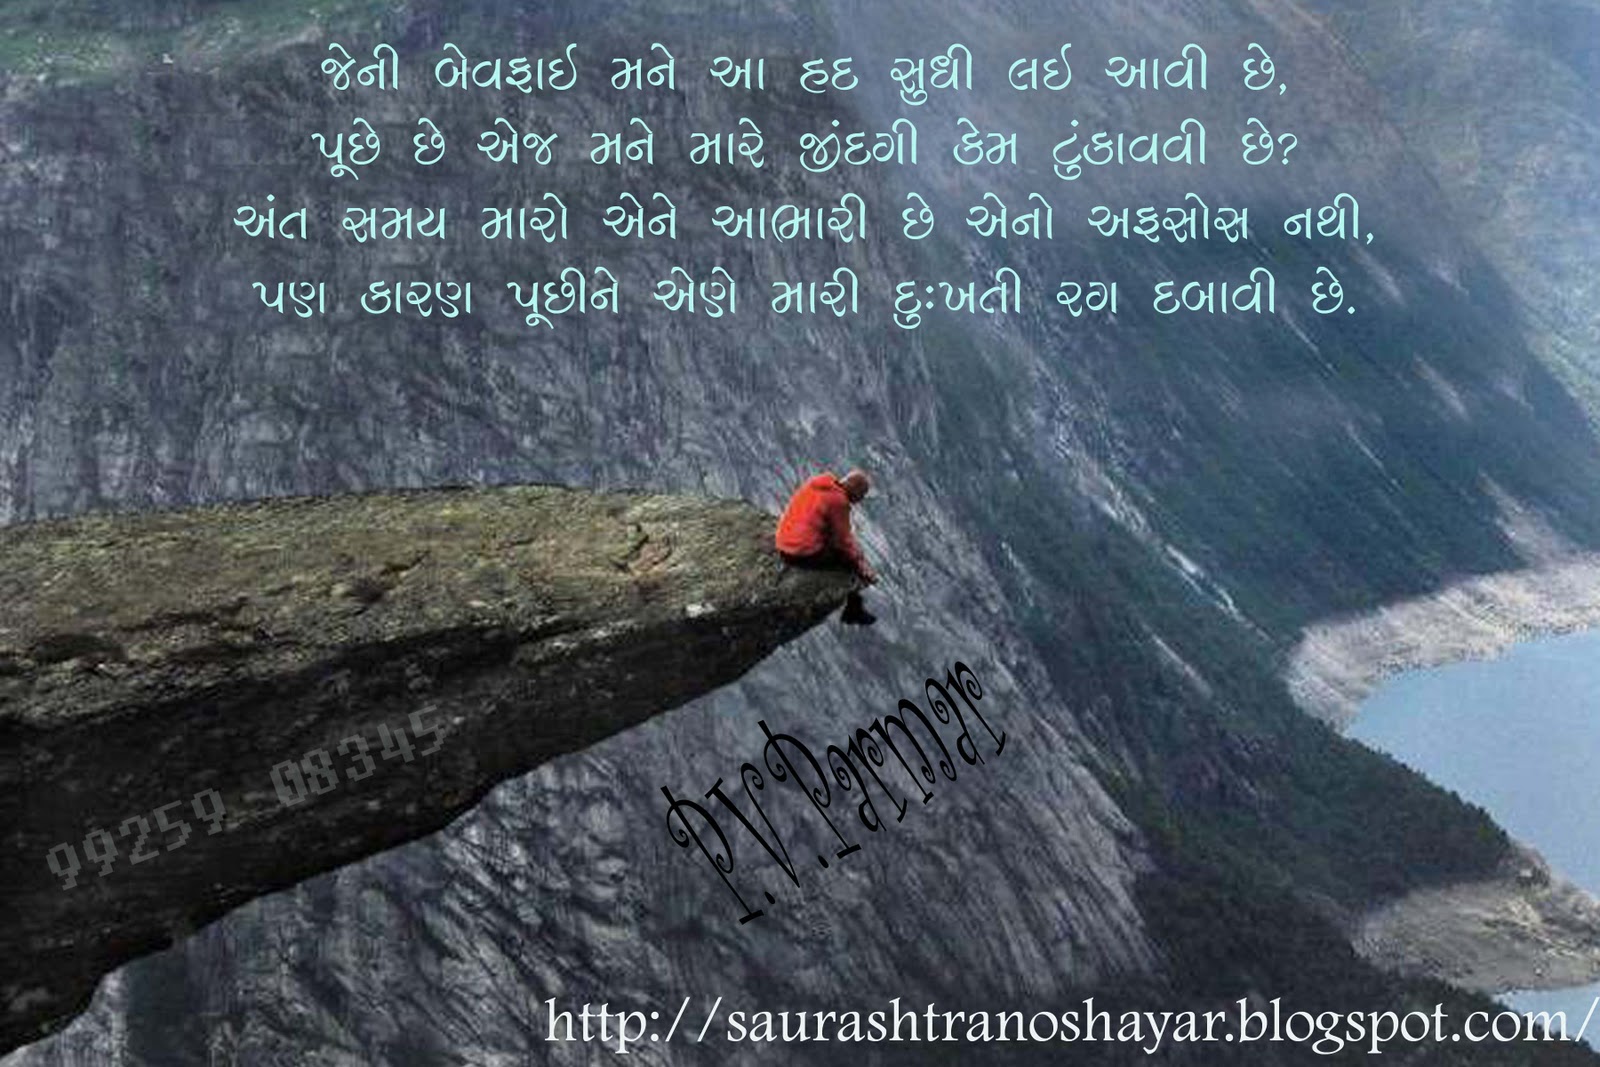 Saurashtra No Shayar: Anjan